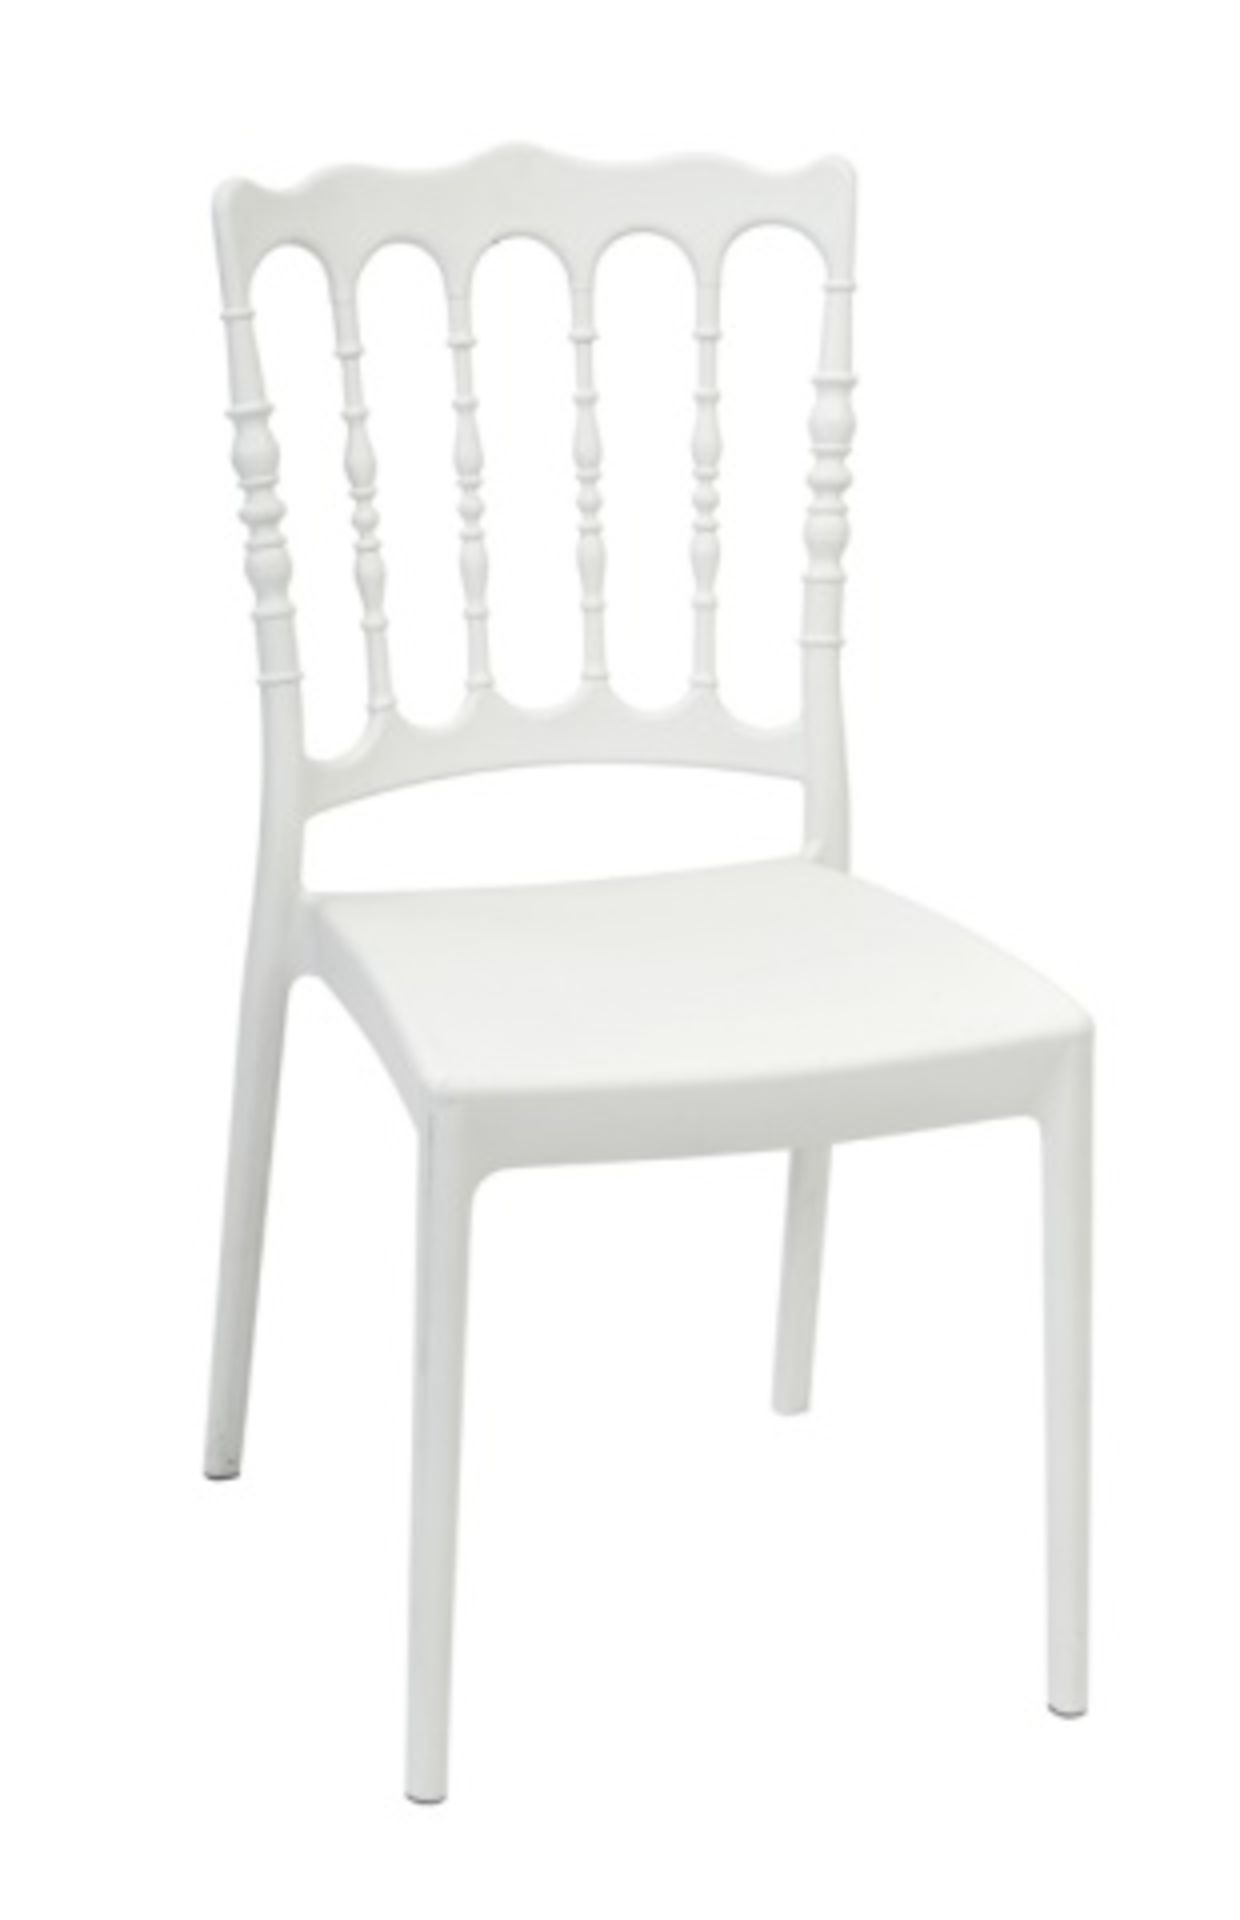 Napoleon Side Chair - White. One piece fiberglass reinforced polypropylene. Dimensions: 17.7"w x